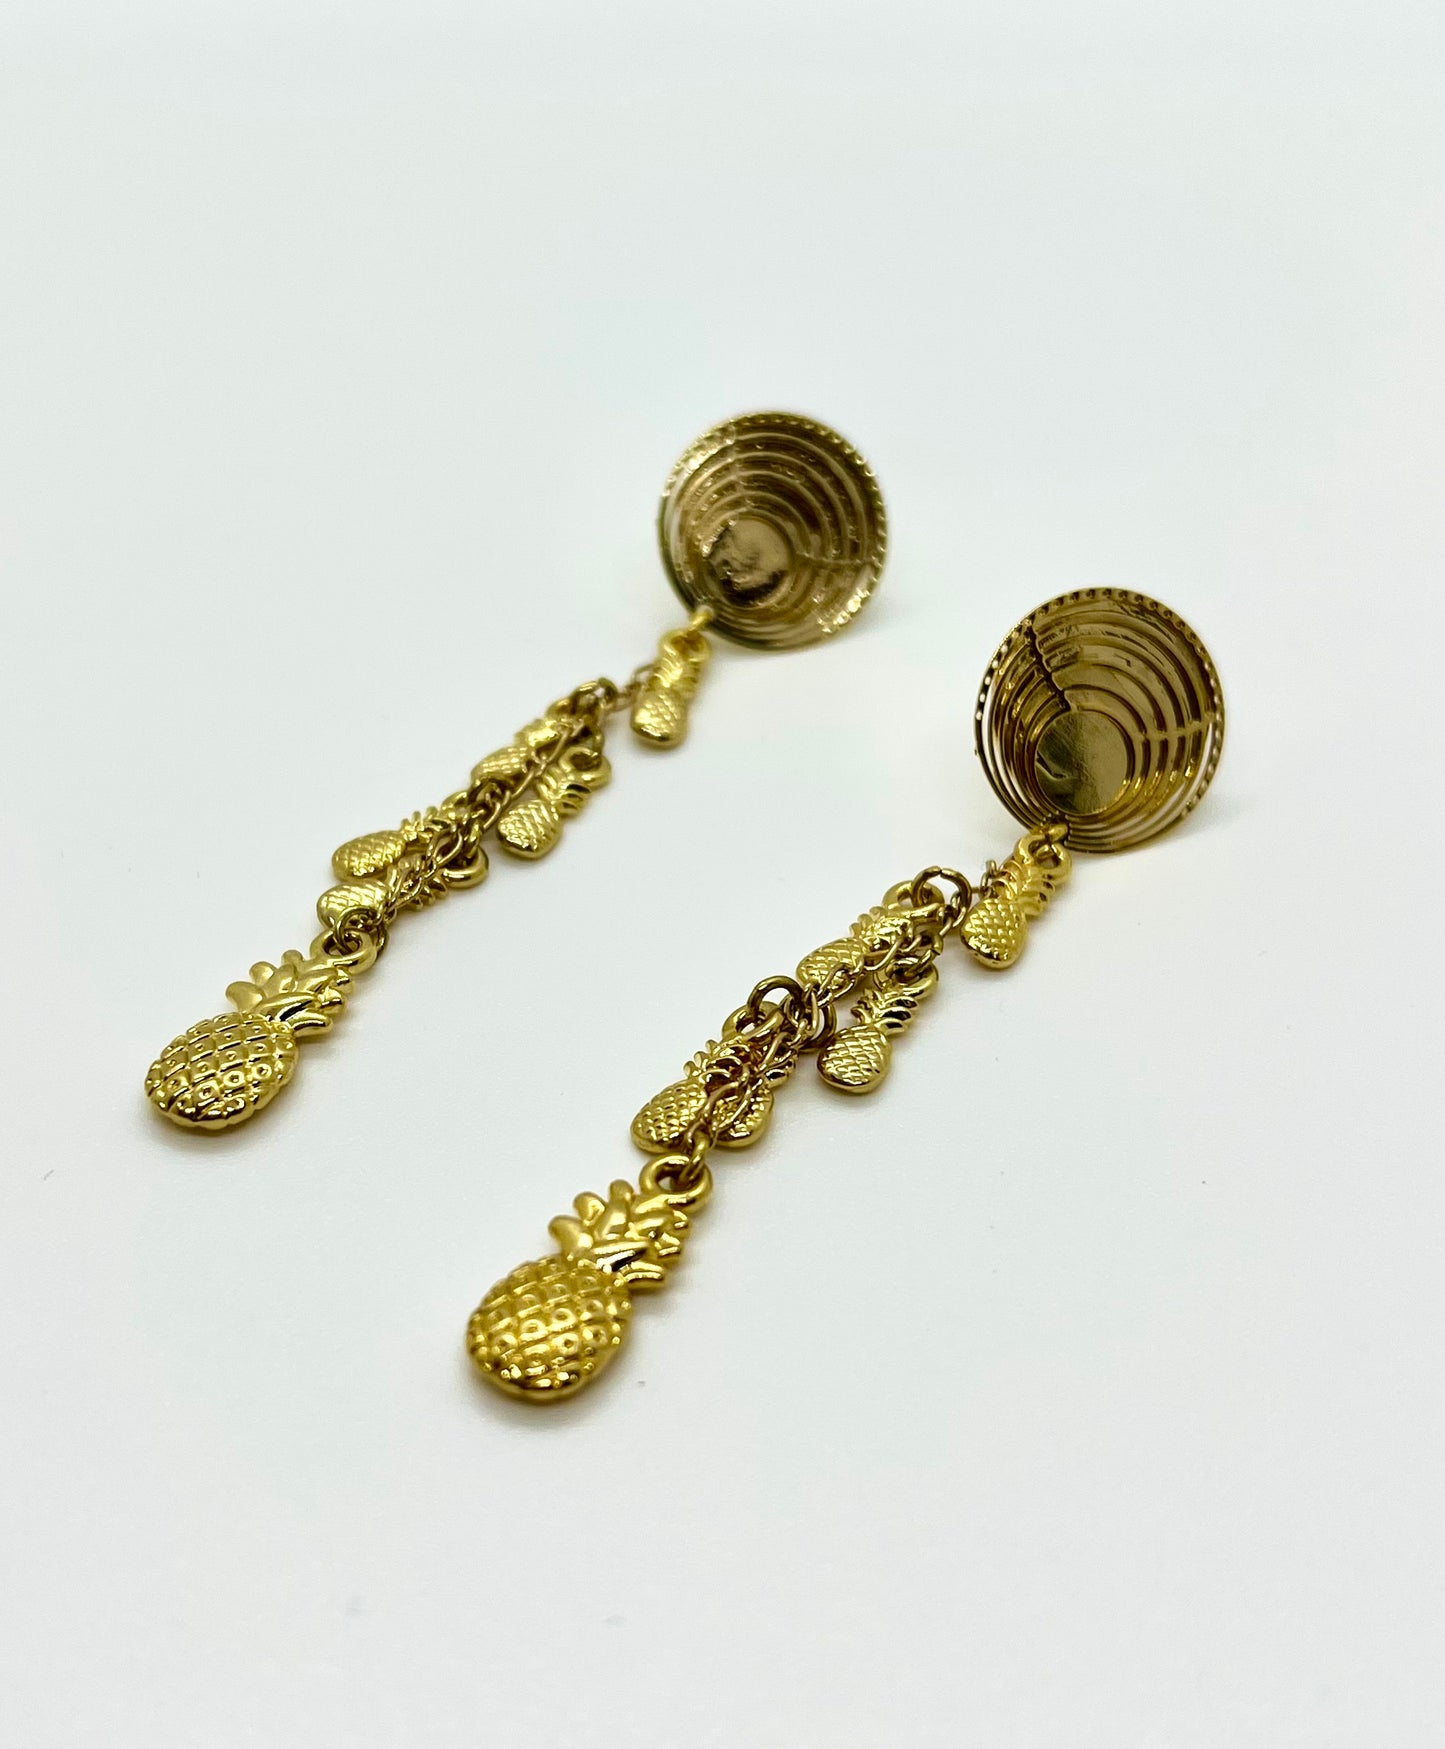 Pineapple chain pendant earrings